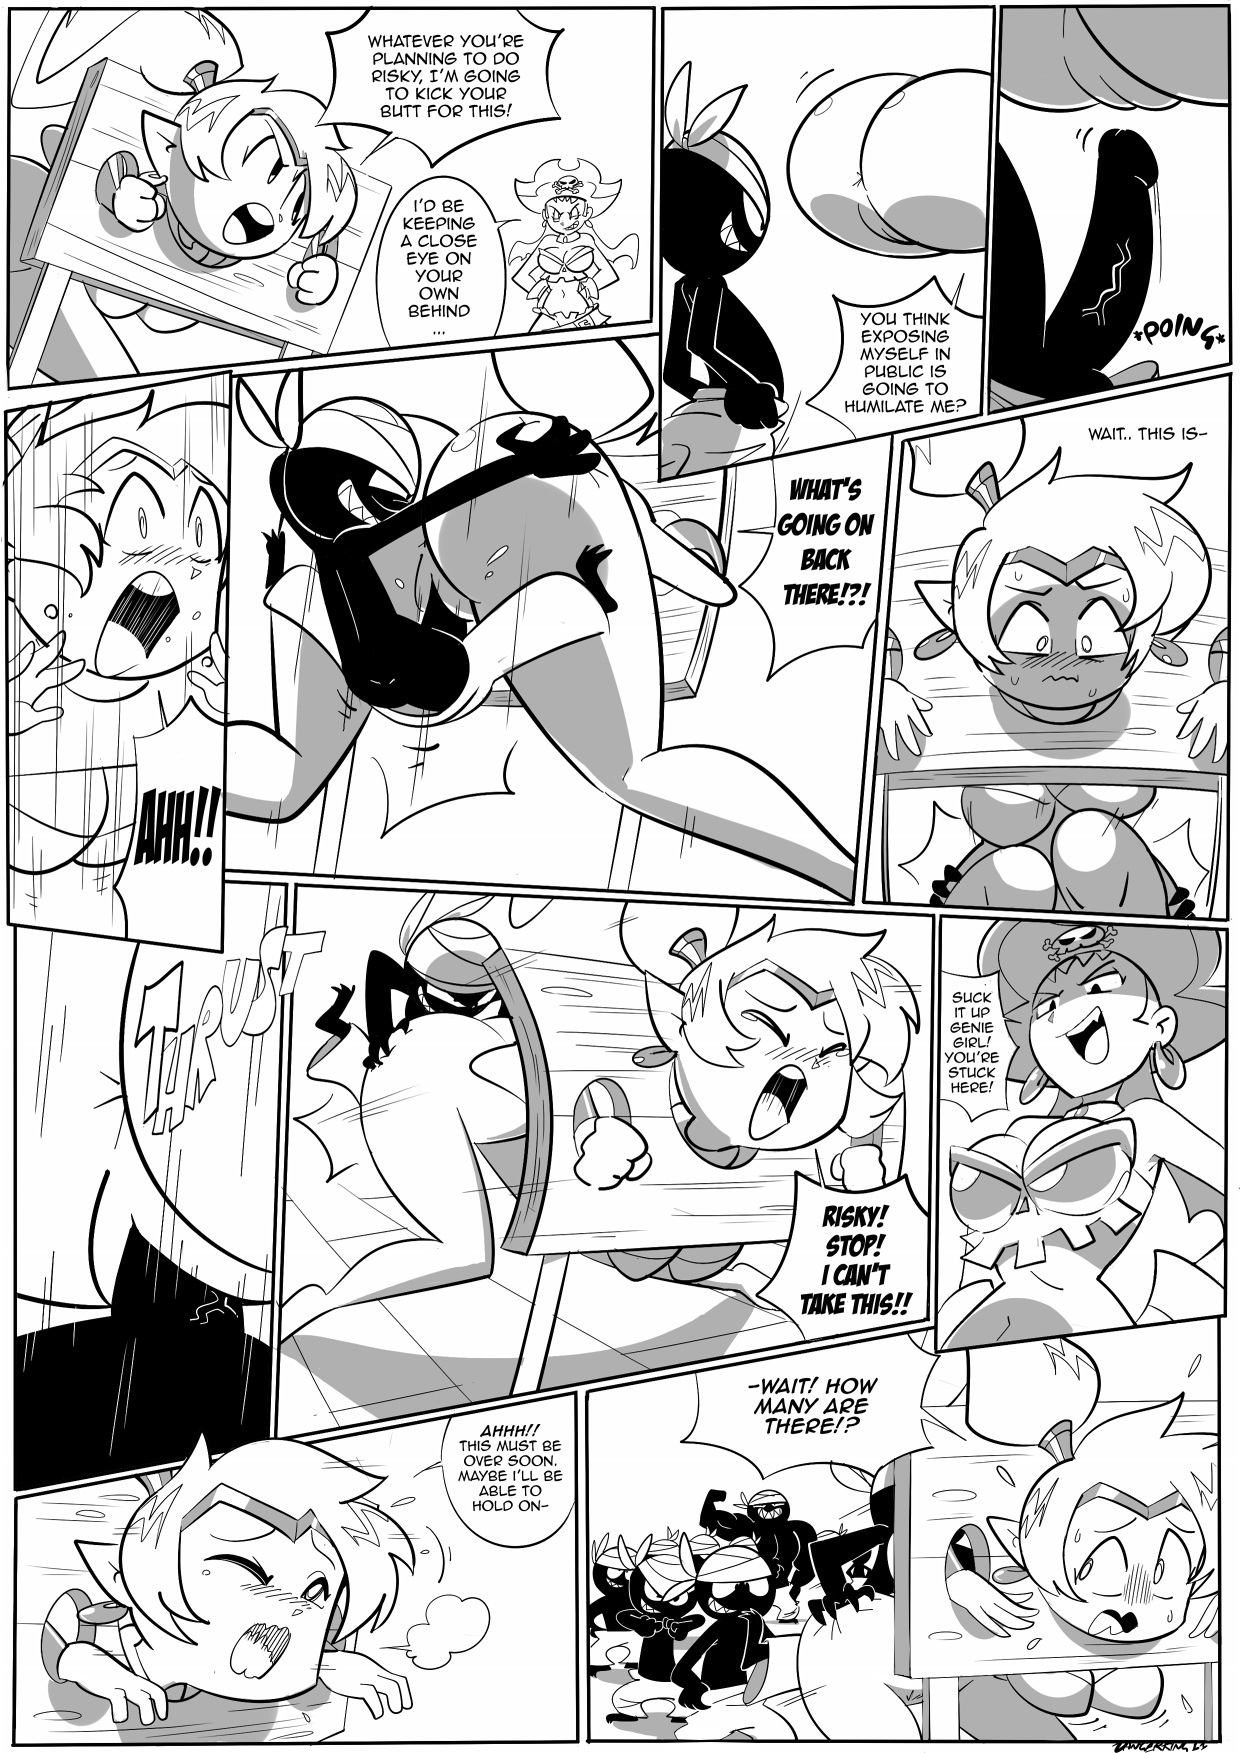 Shantae and Risky's Revenge - Page 2